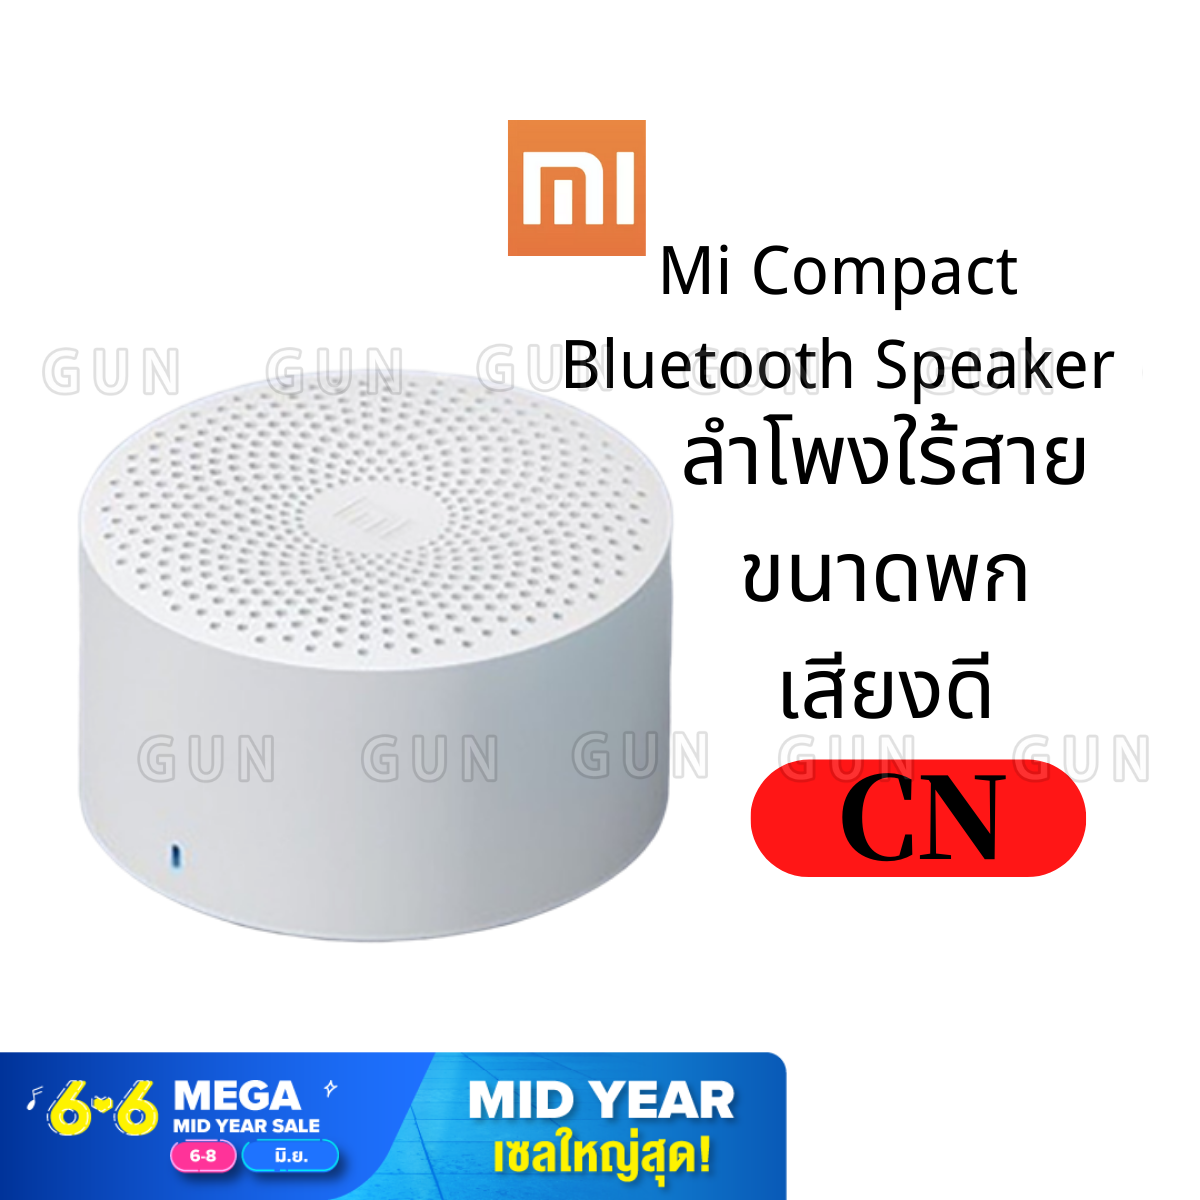 Xiaomi Mi Compact Bluetooth Speaker 2 ลำโพงบลูทูธตัวเล็ก เสียงแน่นดังมากๆ [รับประกันร้าน 3 เดือน]